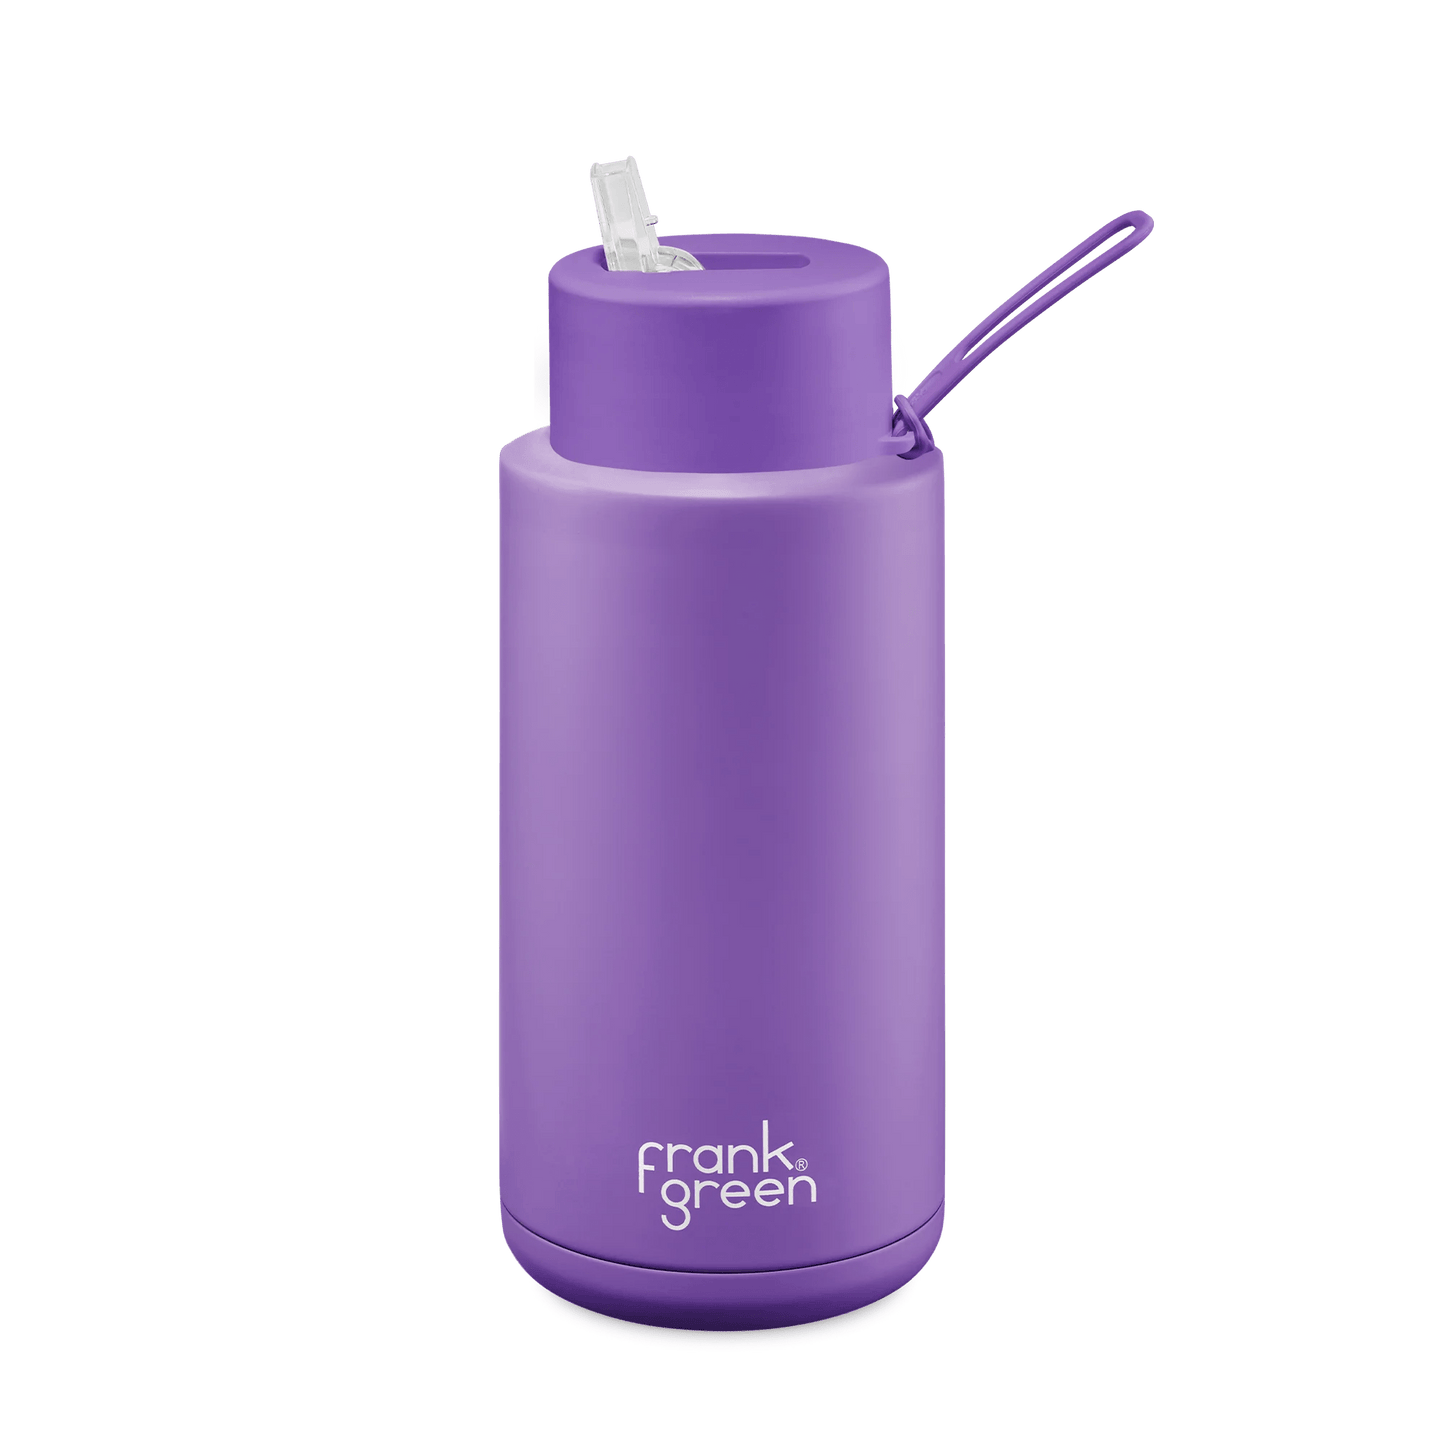 Frank Green Limited Edition Ceramic Reusable Bottle - 34oz/1000ml Cosmic Purple Drink Bottles